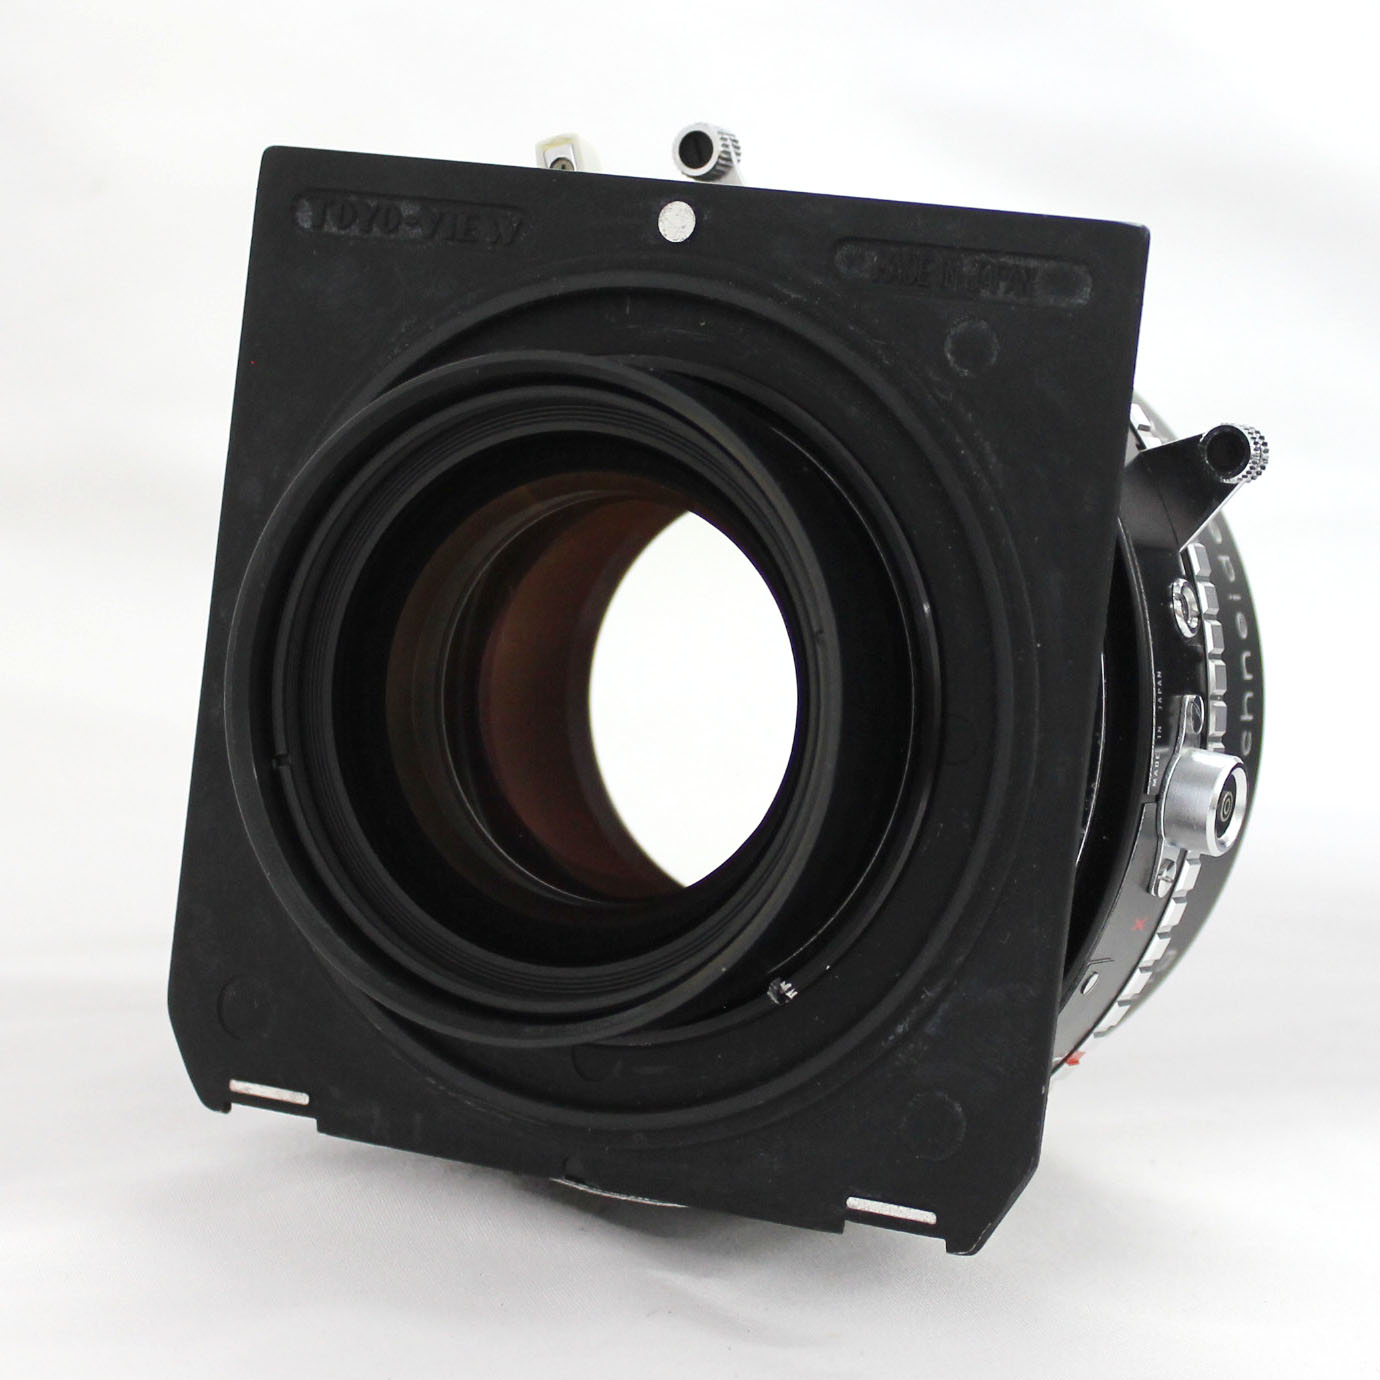 Schneider-Kreuznac Symmar-S 240mm F/5.6 MC Multicoating 8x10 4x5 Large Format Lens Copal No.3 Shutter, Linhof Board with Case from Japan Photo 2